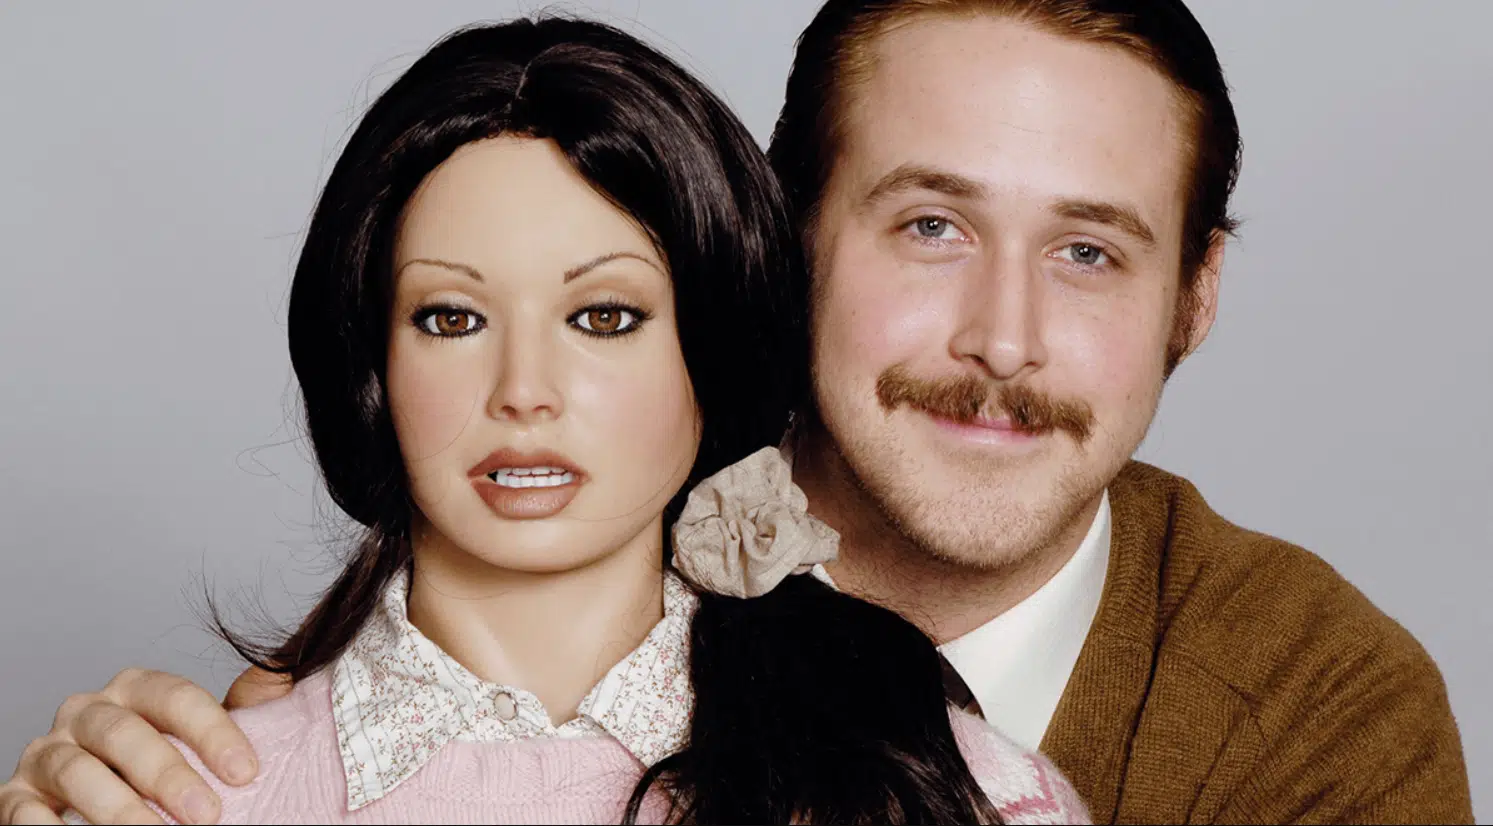 Lars and the Real Girl - Ryan Gosling